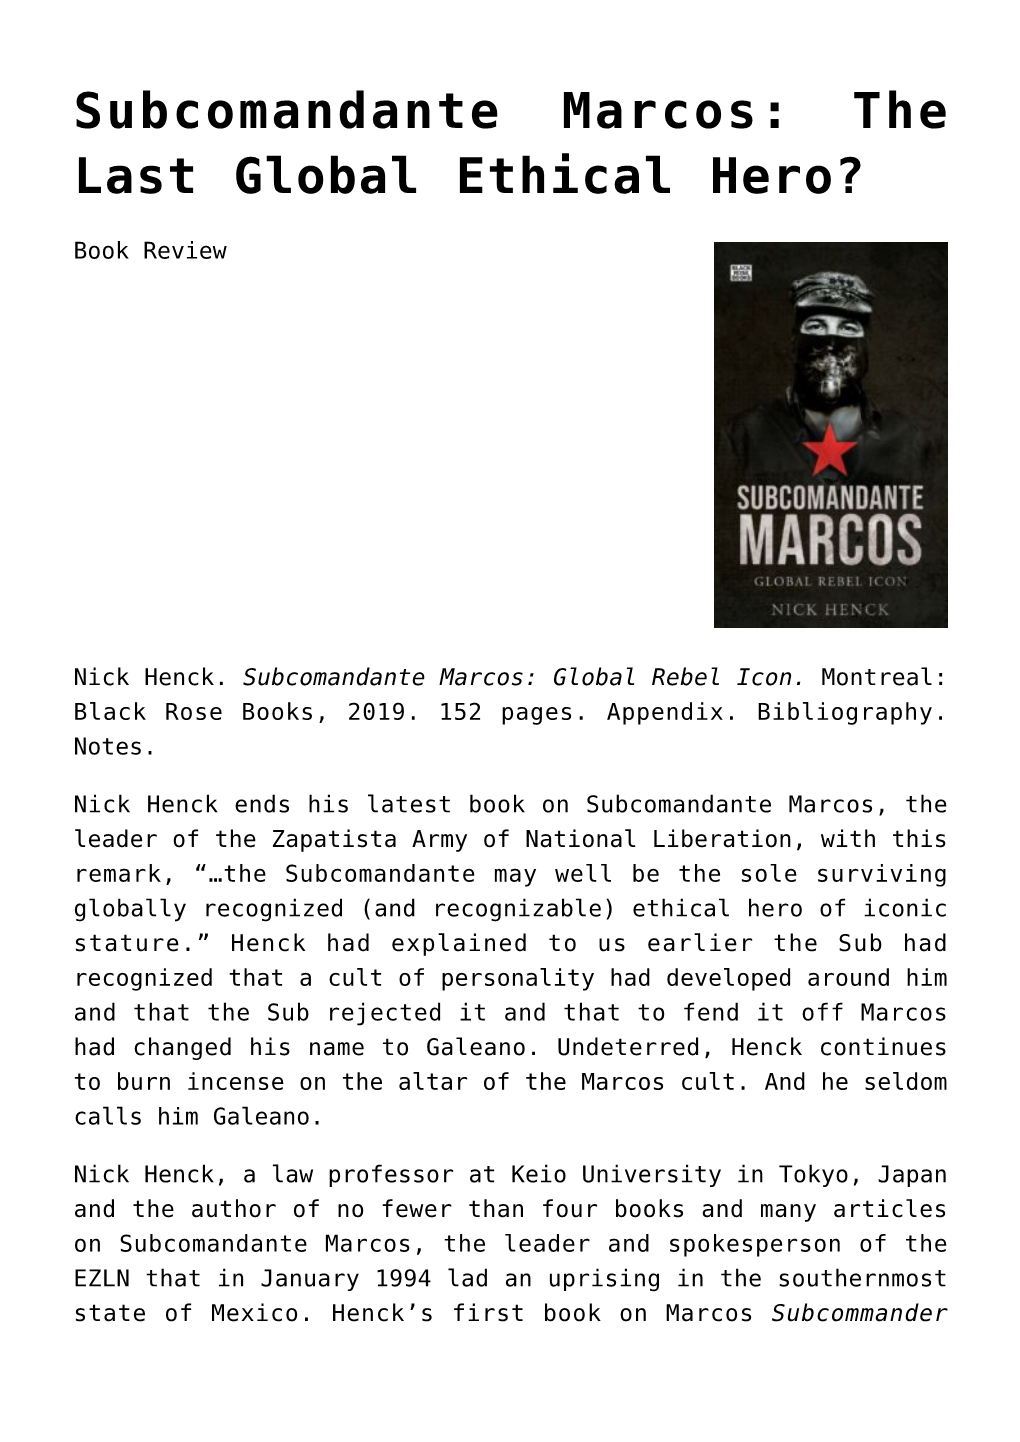 Subcomandante Marcos: the Last Global Ethical Hero?